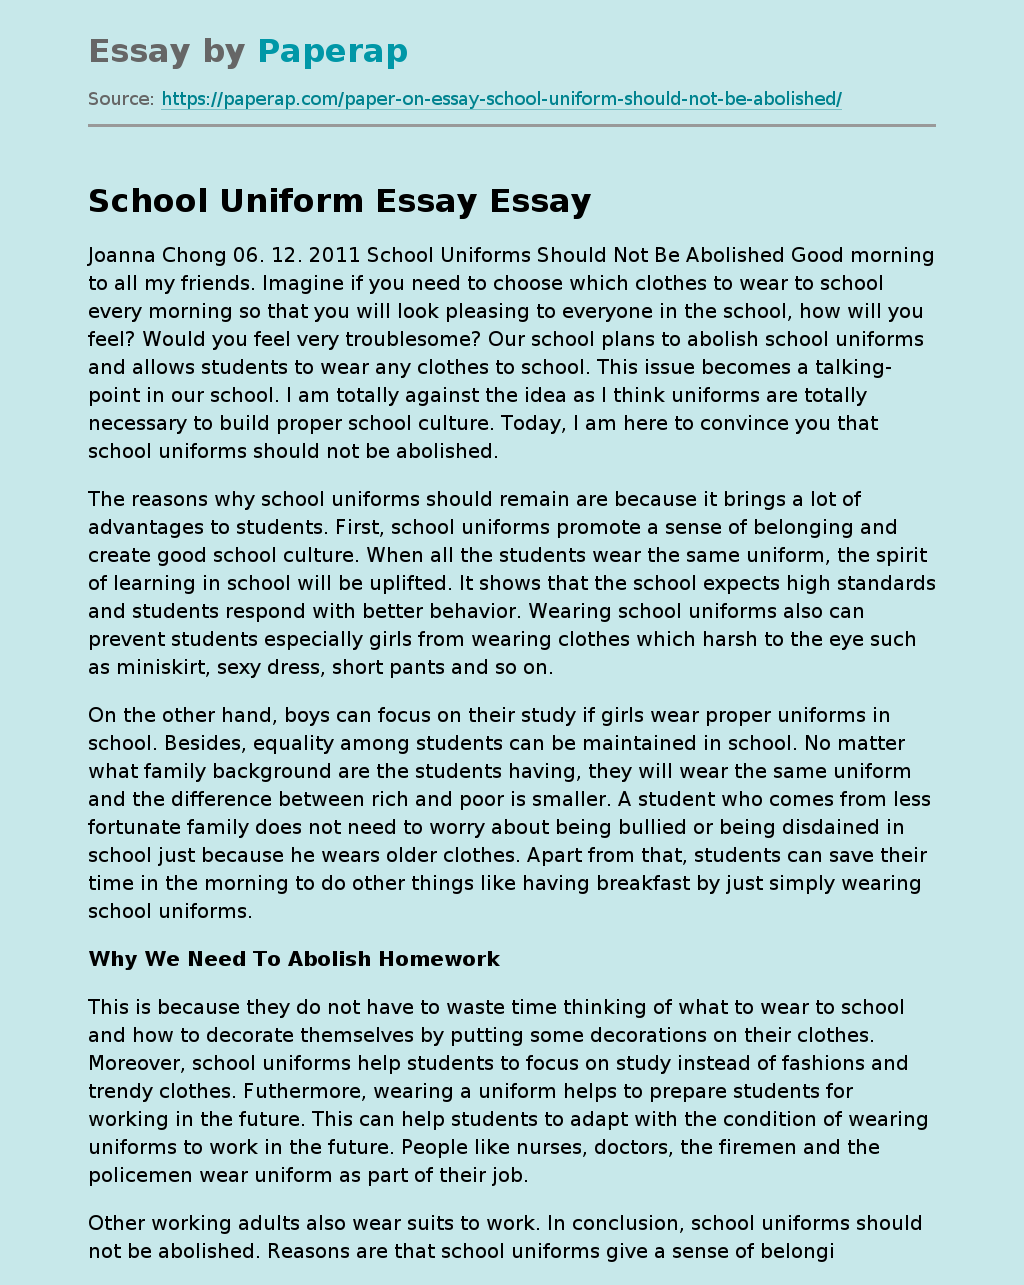 School Uniform Essay